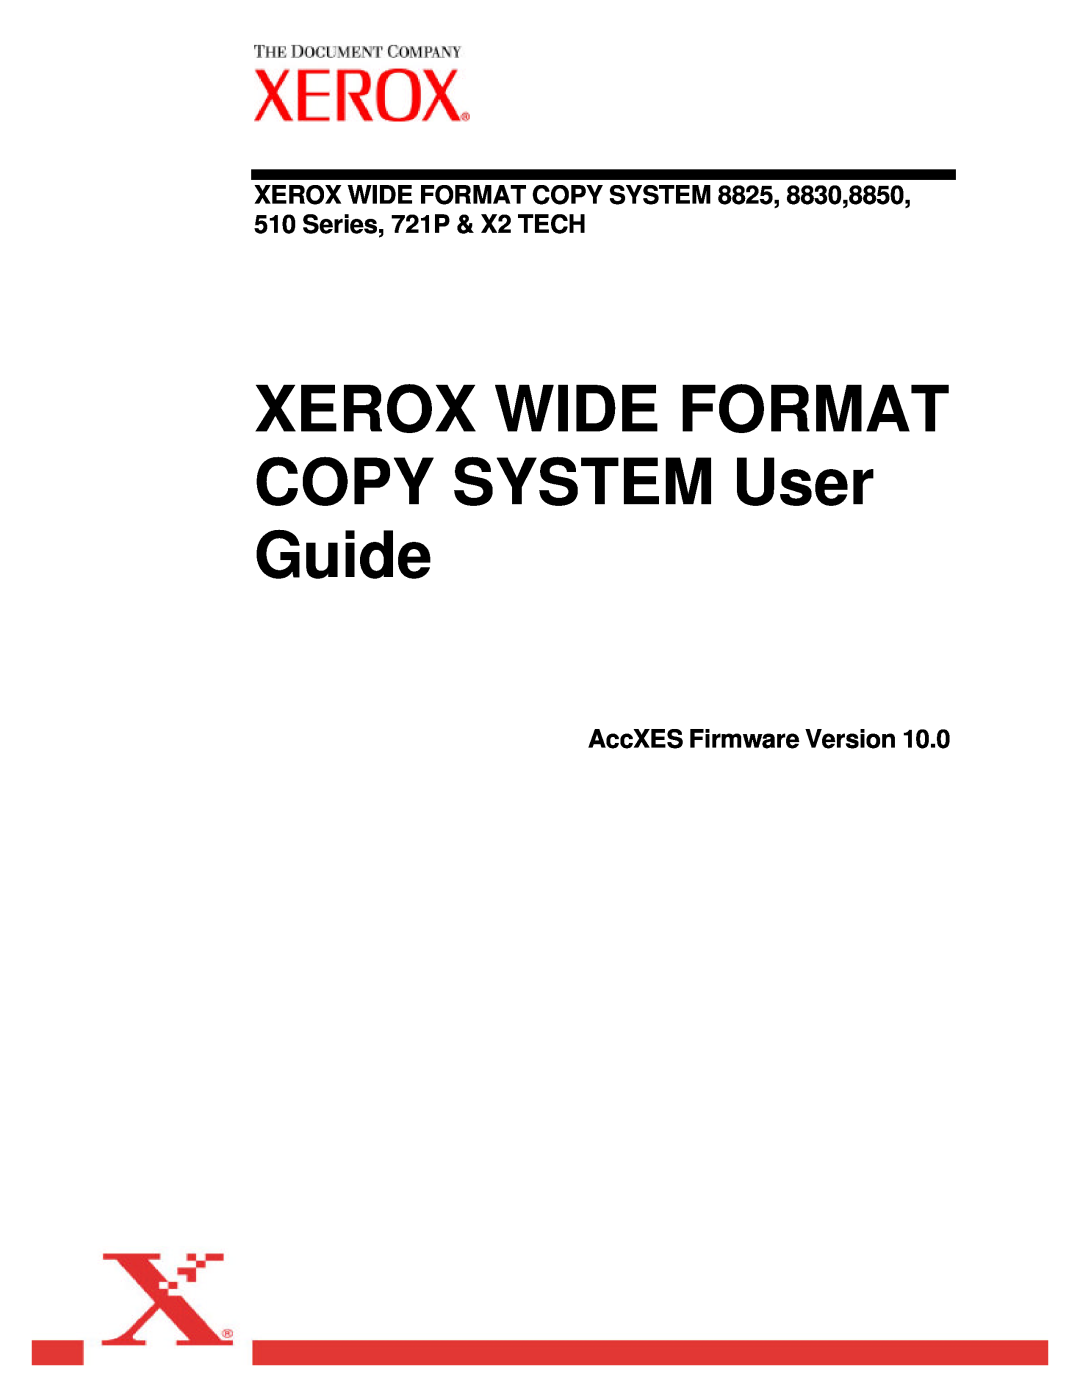 Xerox 8850, 8825, 8830, X2 manual XEROX WIDE FORMAT COPY SYSTEM User Guide, AccXES Firmware Version 